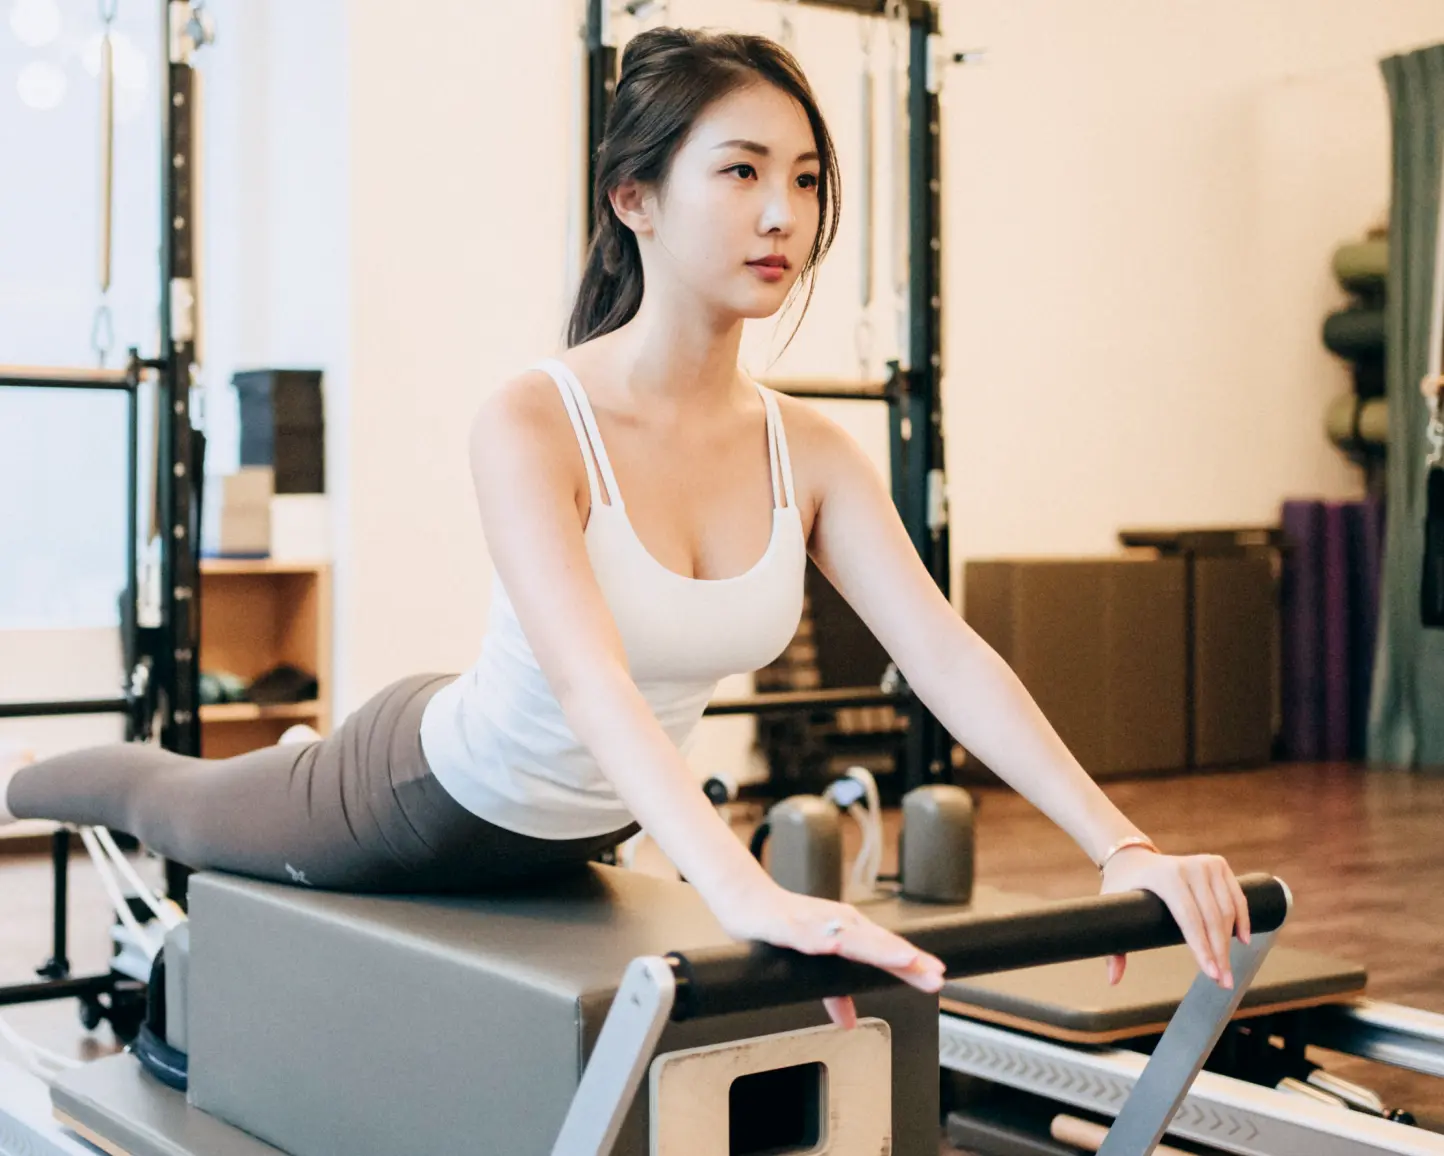 Breathe Pilates Studio Bangkok: Good health with Pilates exercises